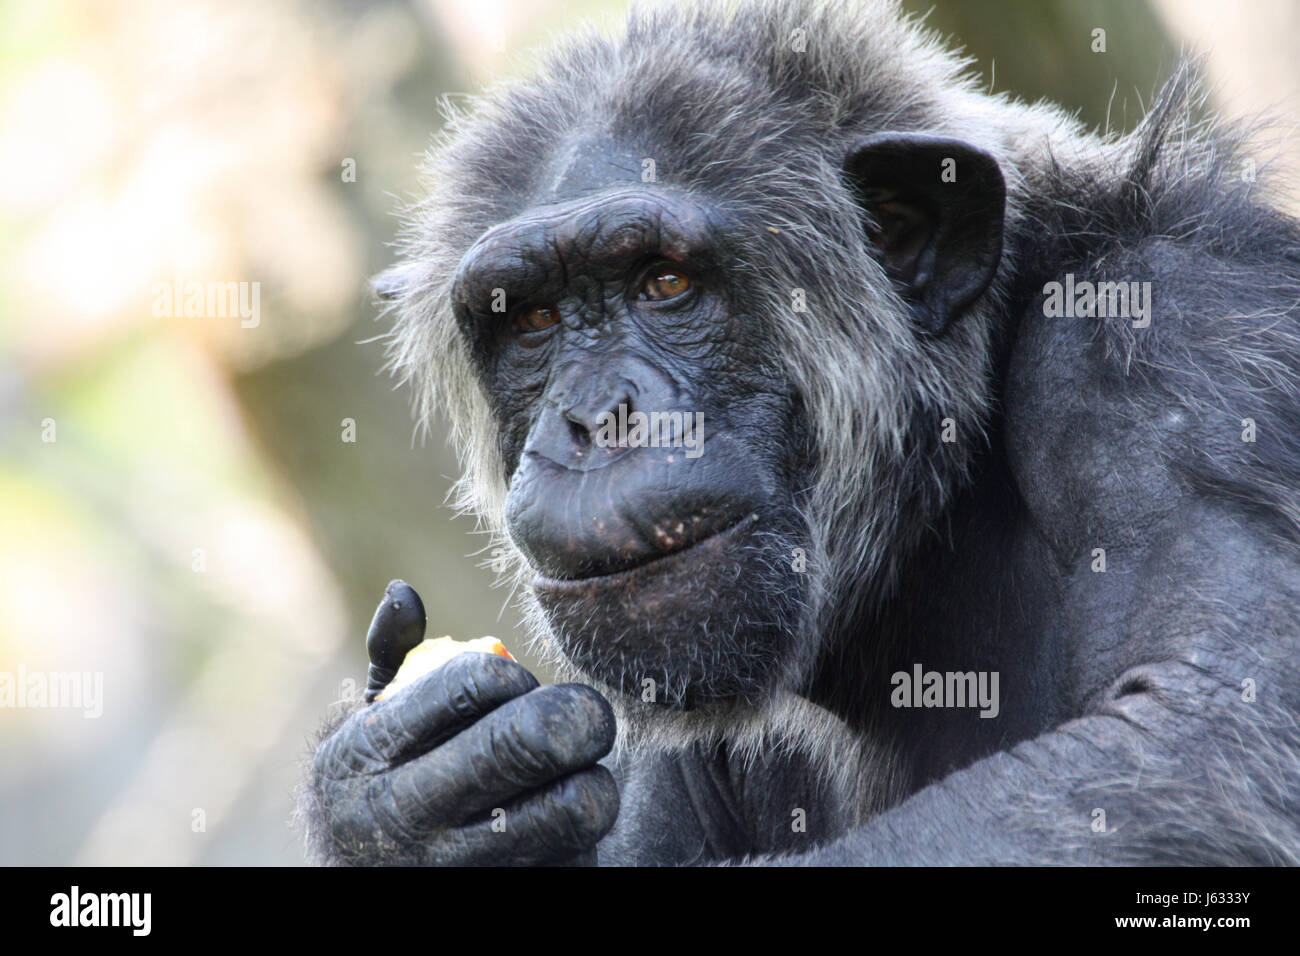 monkey chimpanzee anthropoid senior senior citizen elderly person elder person Stock Photo